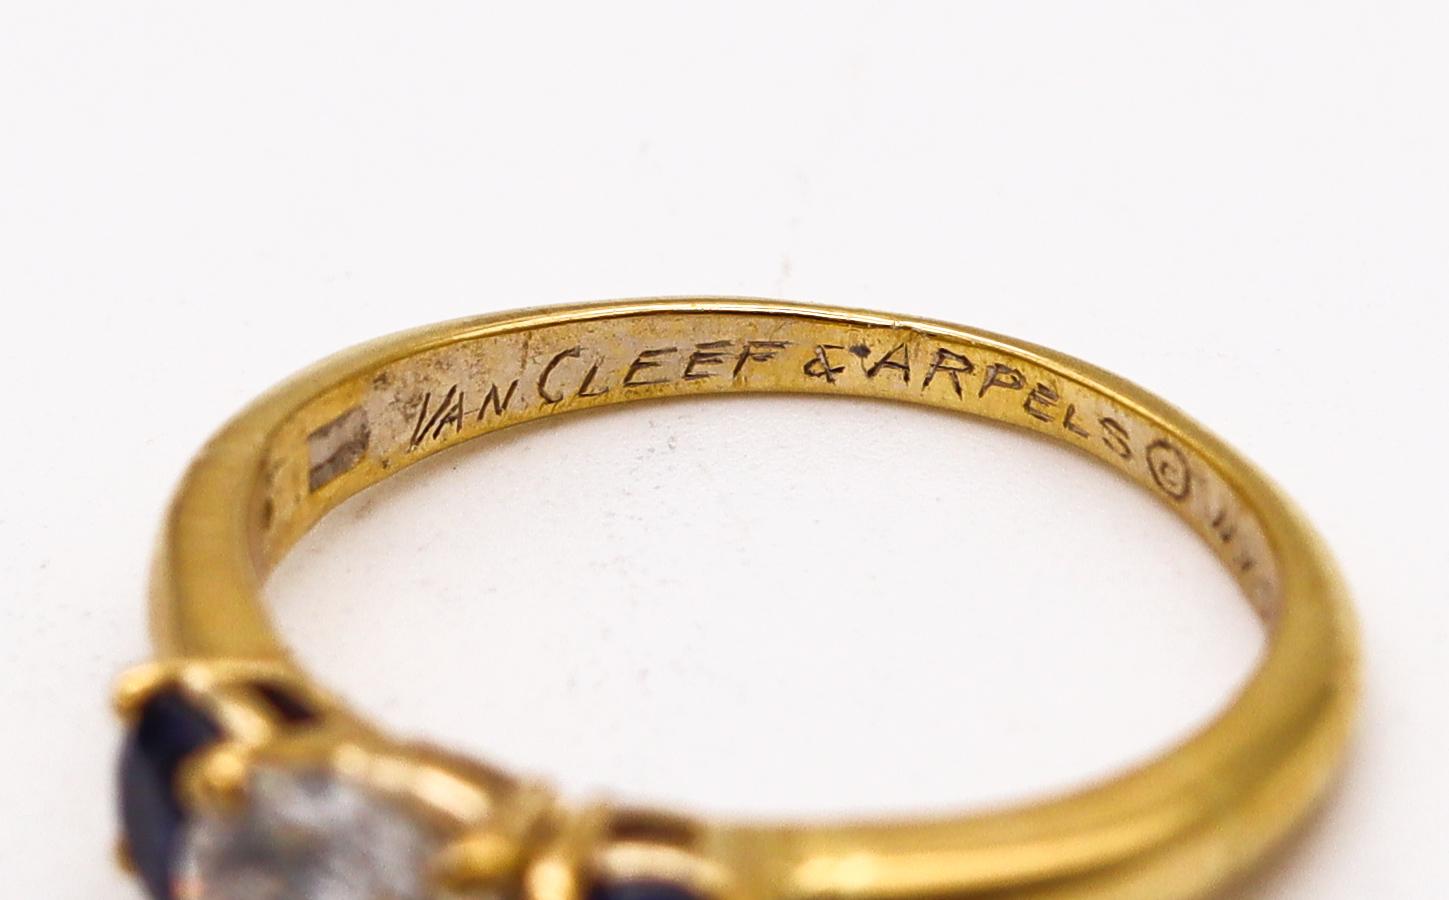 Women's Van Cleef & Arpels Gia Certified Gems Ring in 18Kt Gold with Diamond & Sapphires